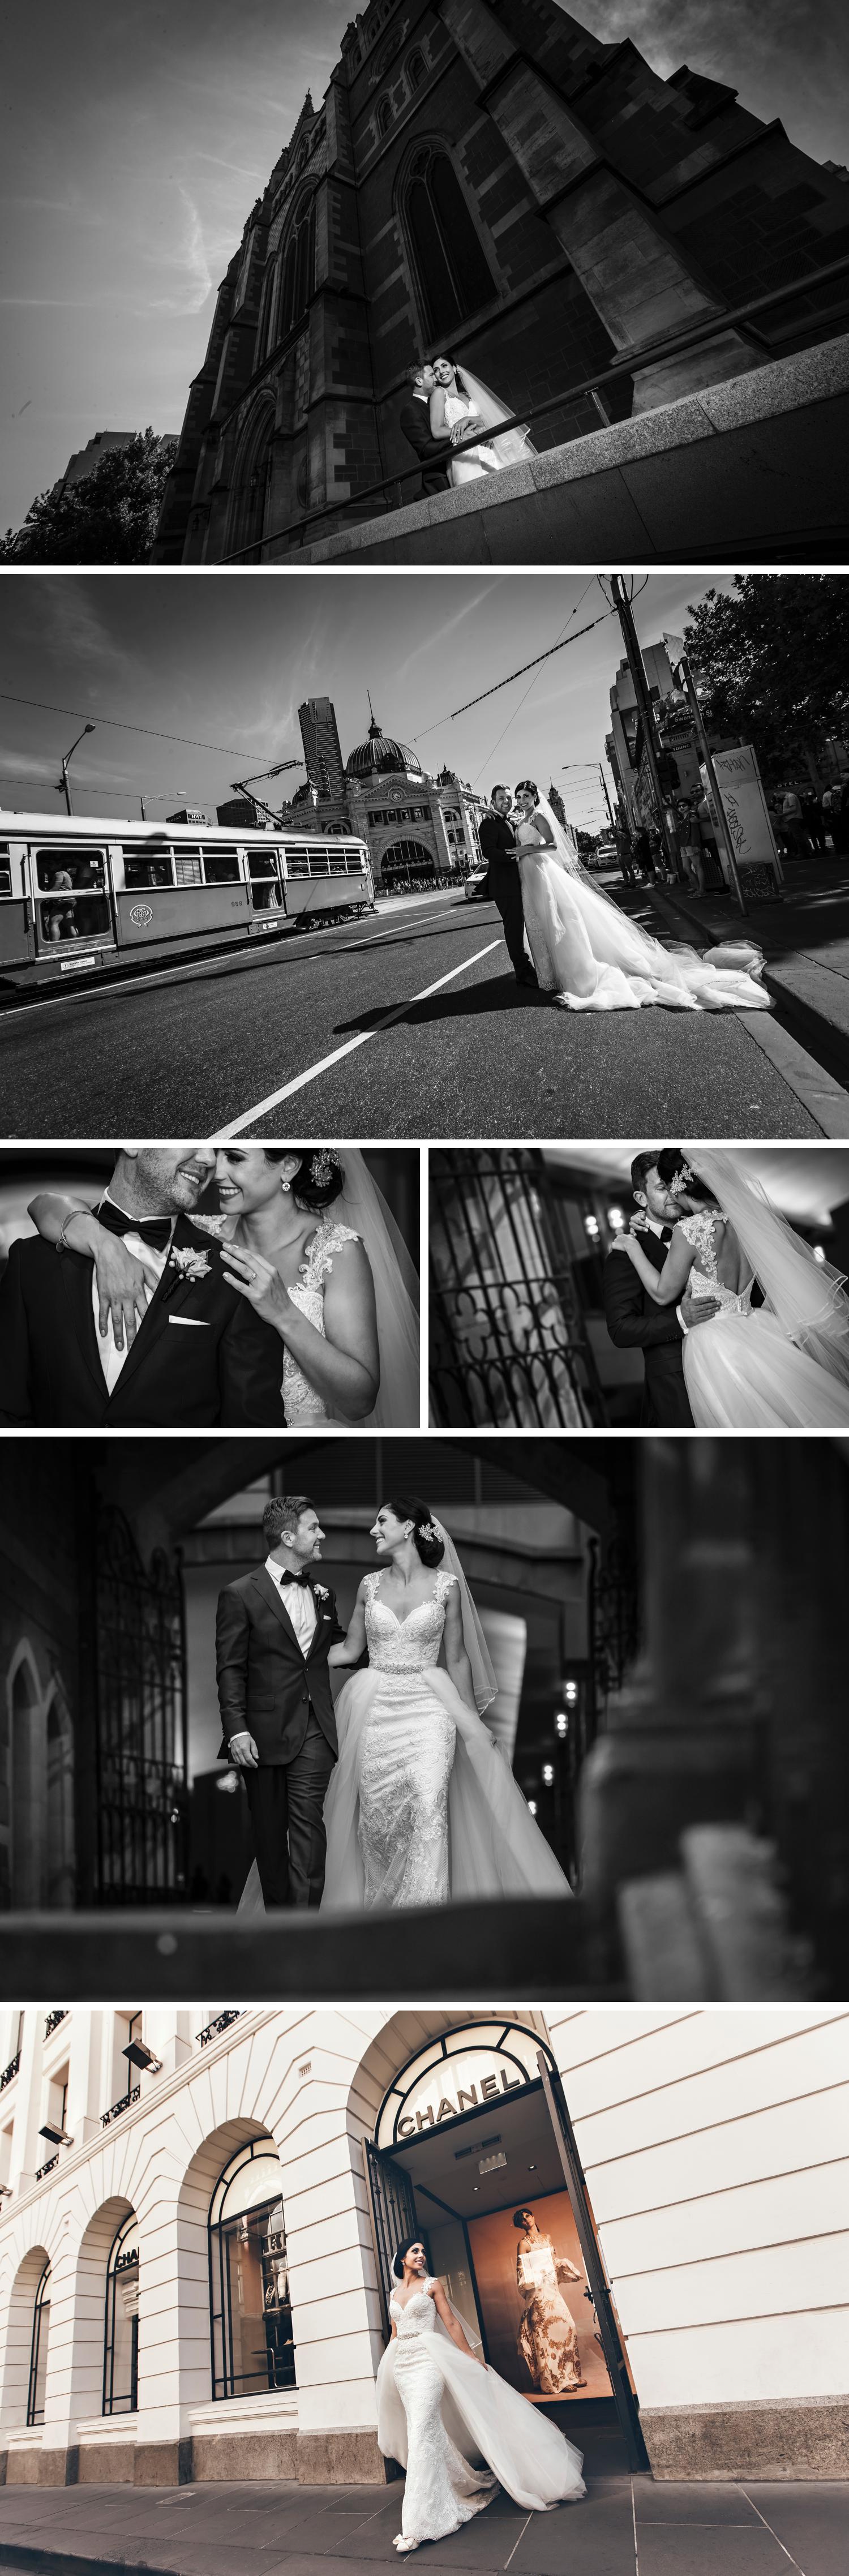 Melbourne Wedding photo, Flinders Street Station Wedding, Bridal Party Wedding Photo by Danae Studios